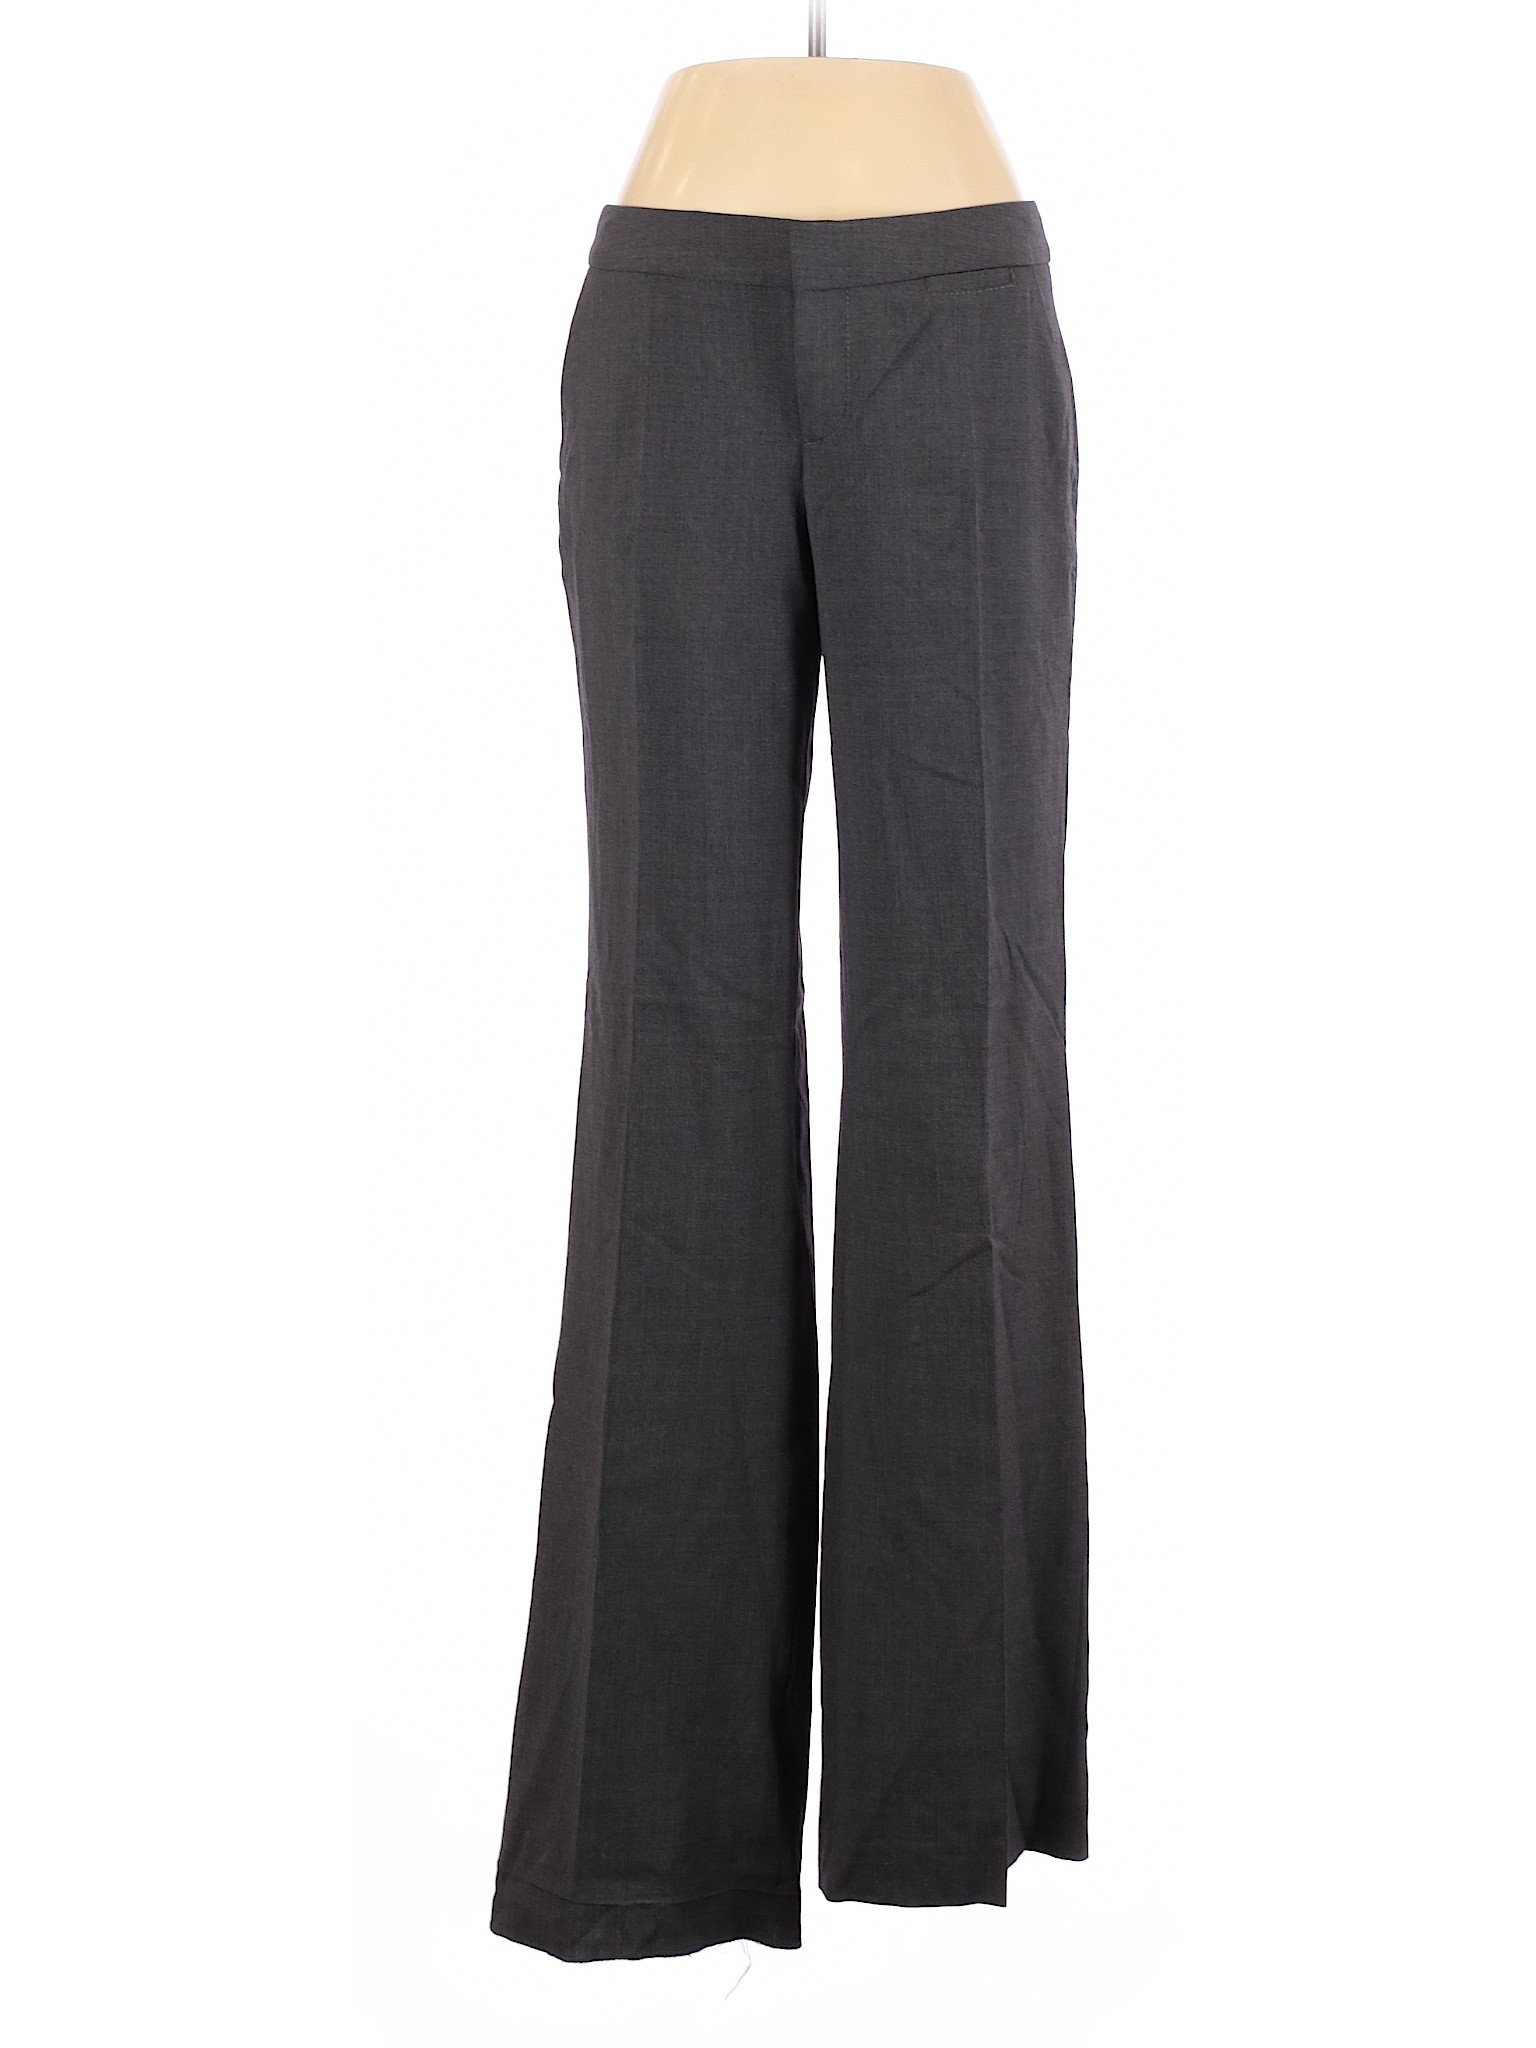 Banana Republic Women Gray Wool Pants 4 | eBay